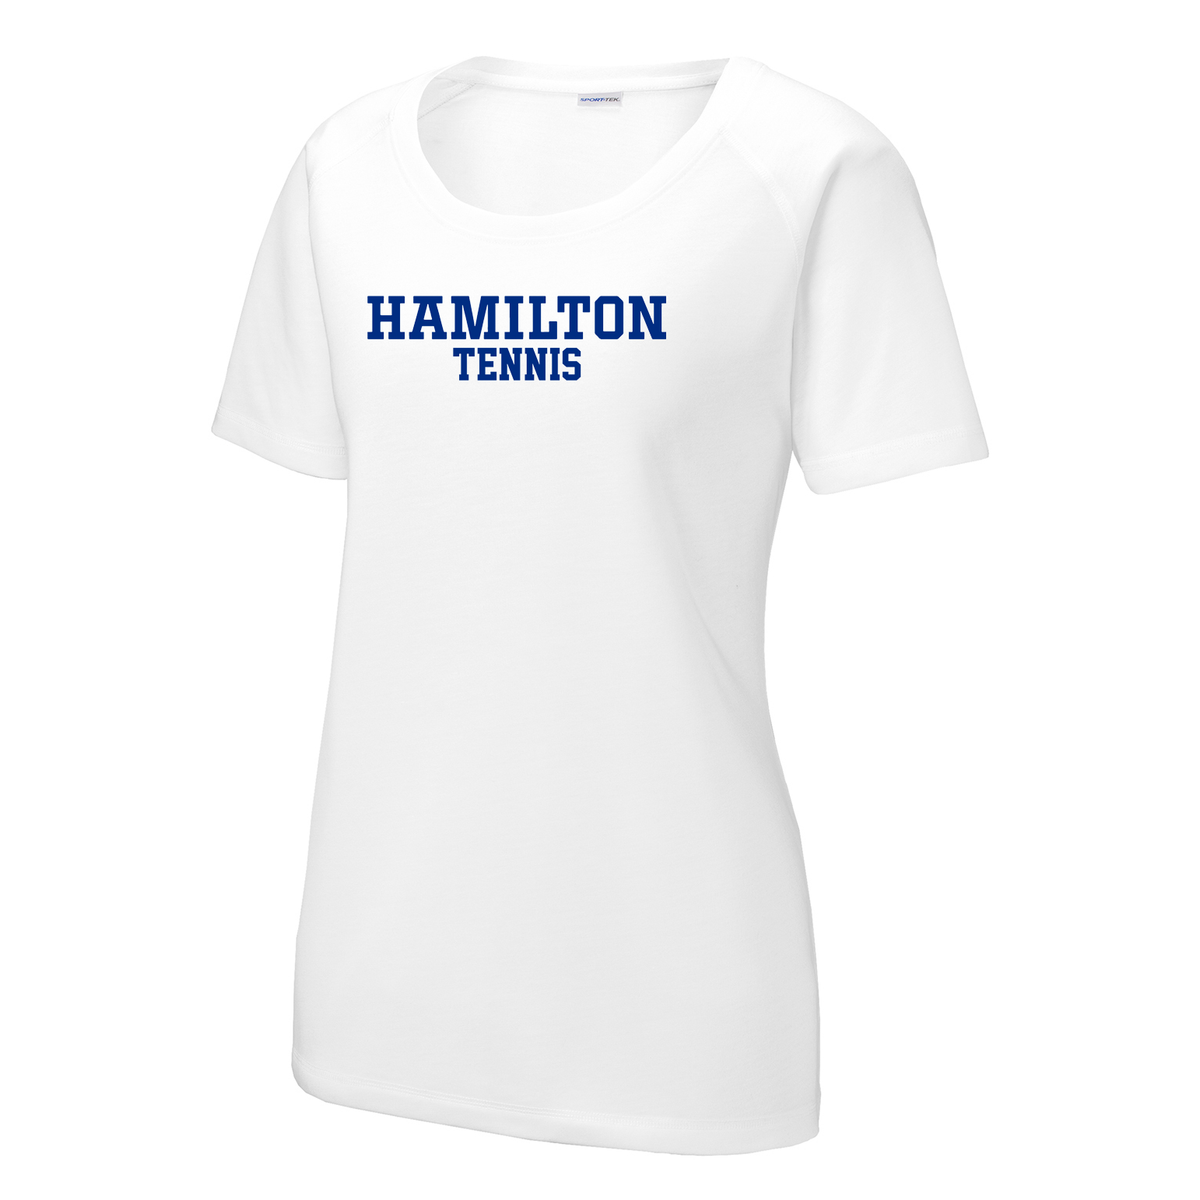 Hamilton College Tennis Women's Raglan CottonTouch